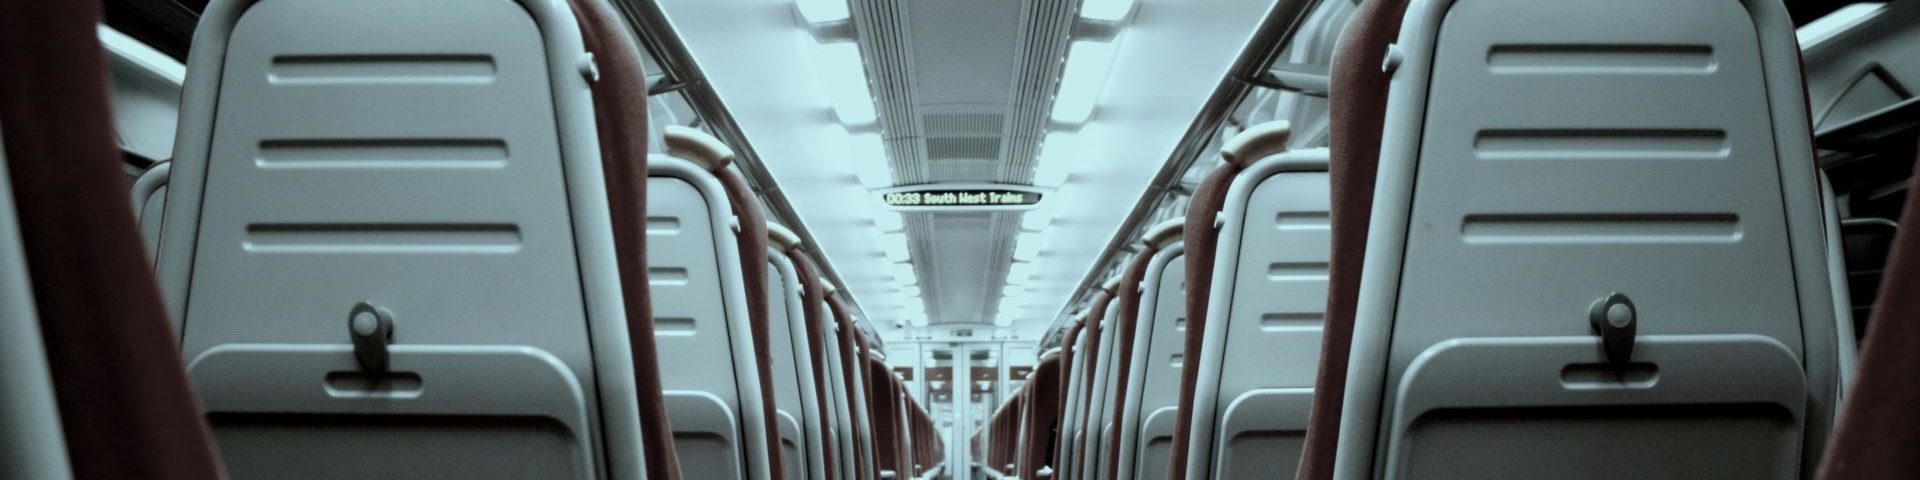 Photo of the aisle of a train